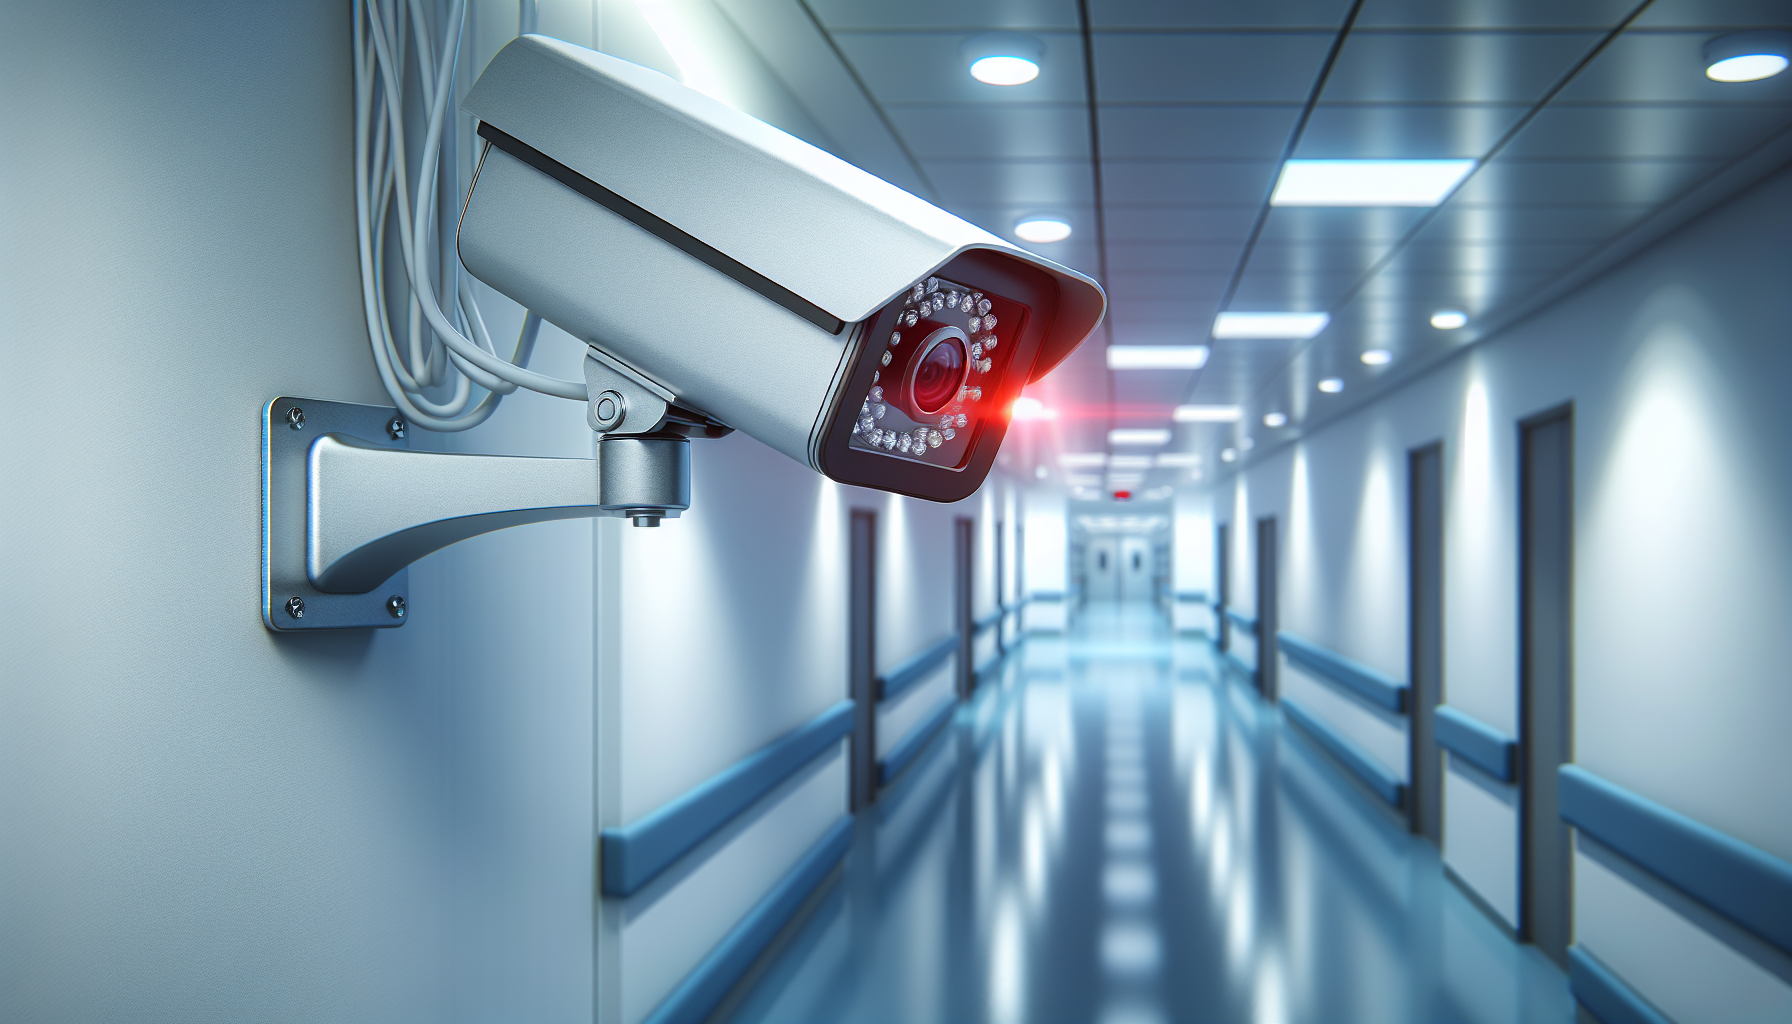 Surveillance camera monitoring a hospital corridor